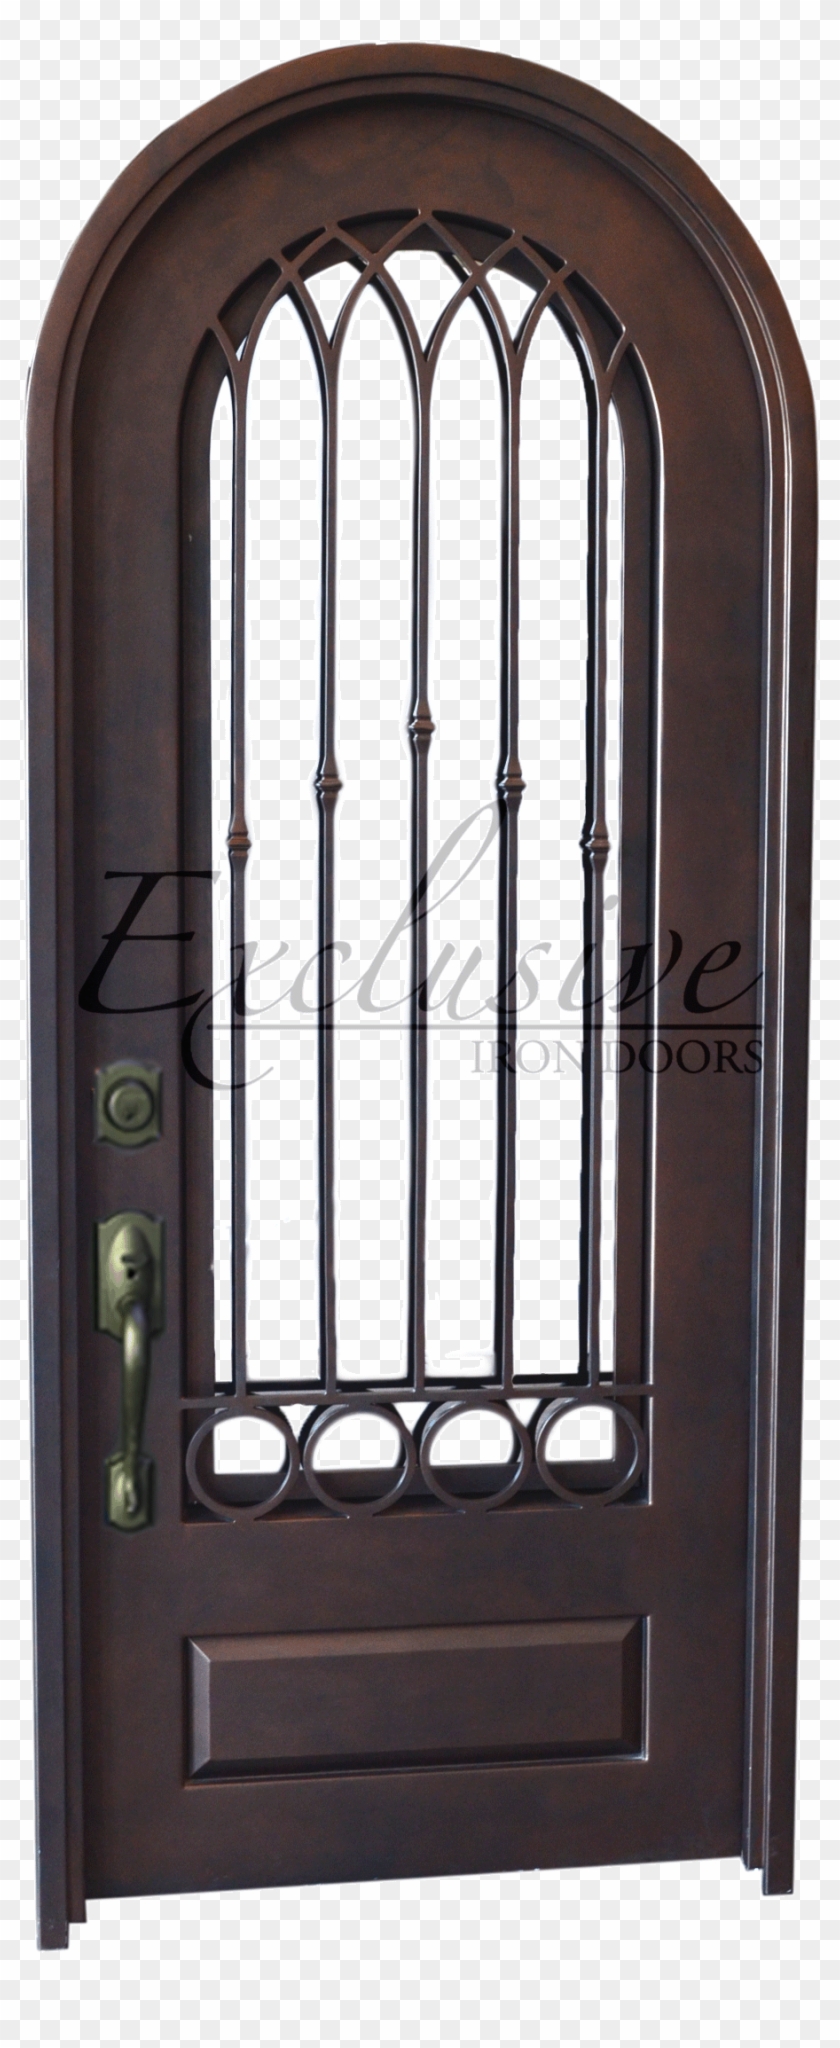 Adelene Round Single Iron Door Exclusive Iron Doors - Arch Clipart